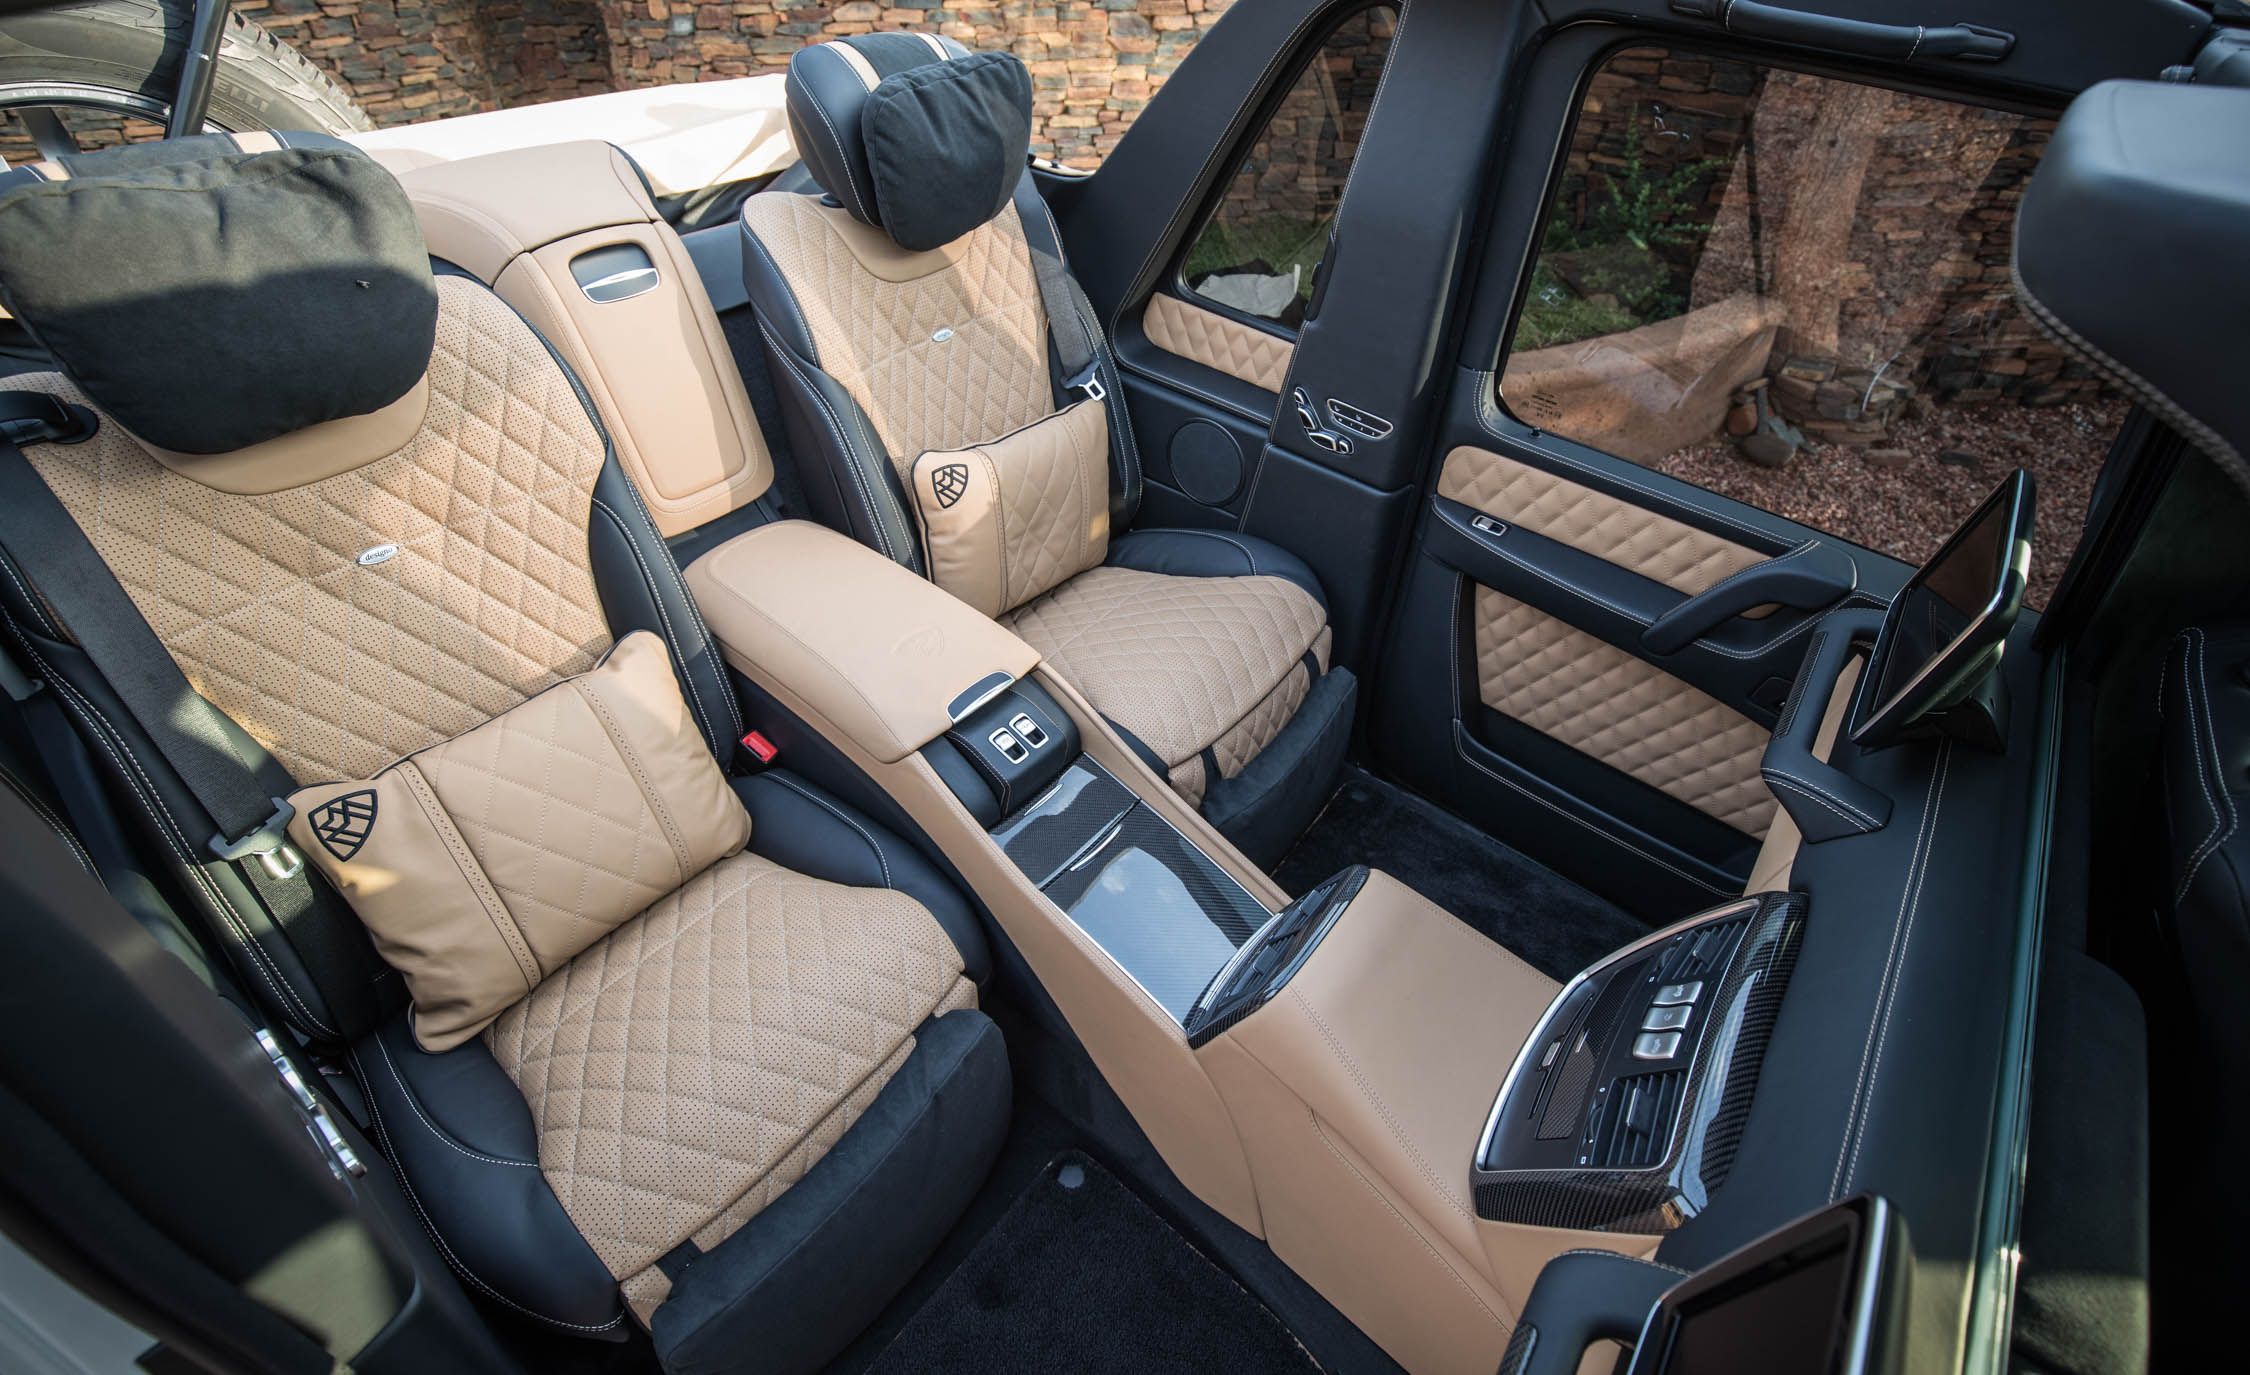 2018 Mercedes Maybach G650 Landaulet Interior Seats Rear Passengers (View 34 of 52)